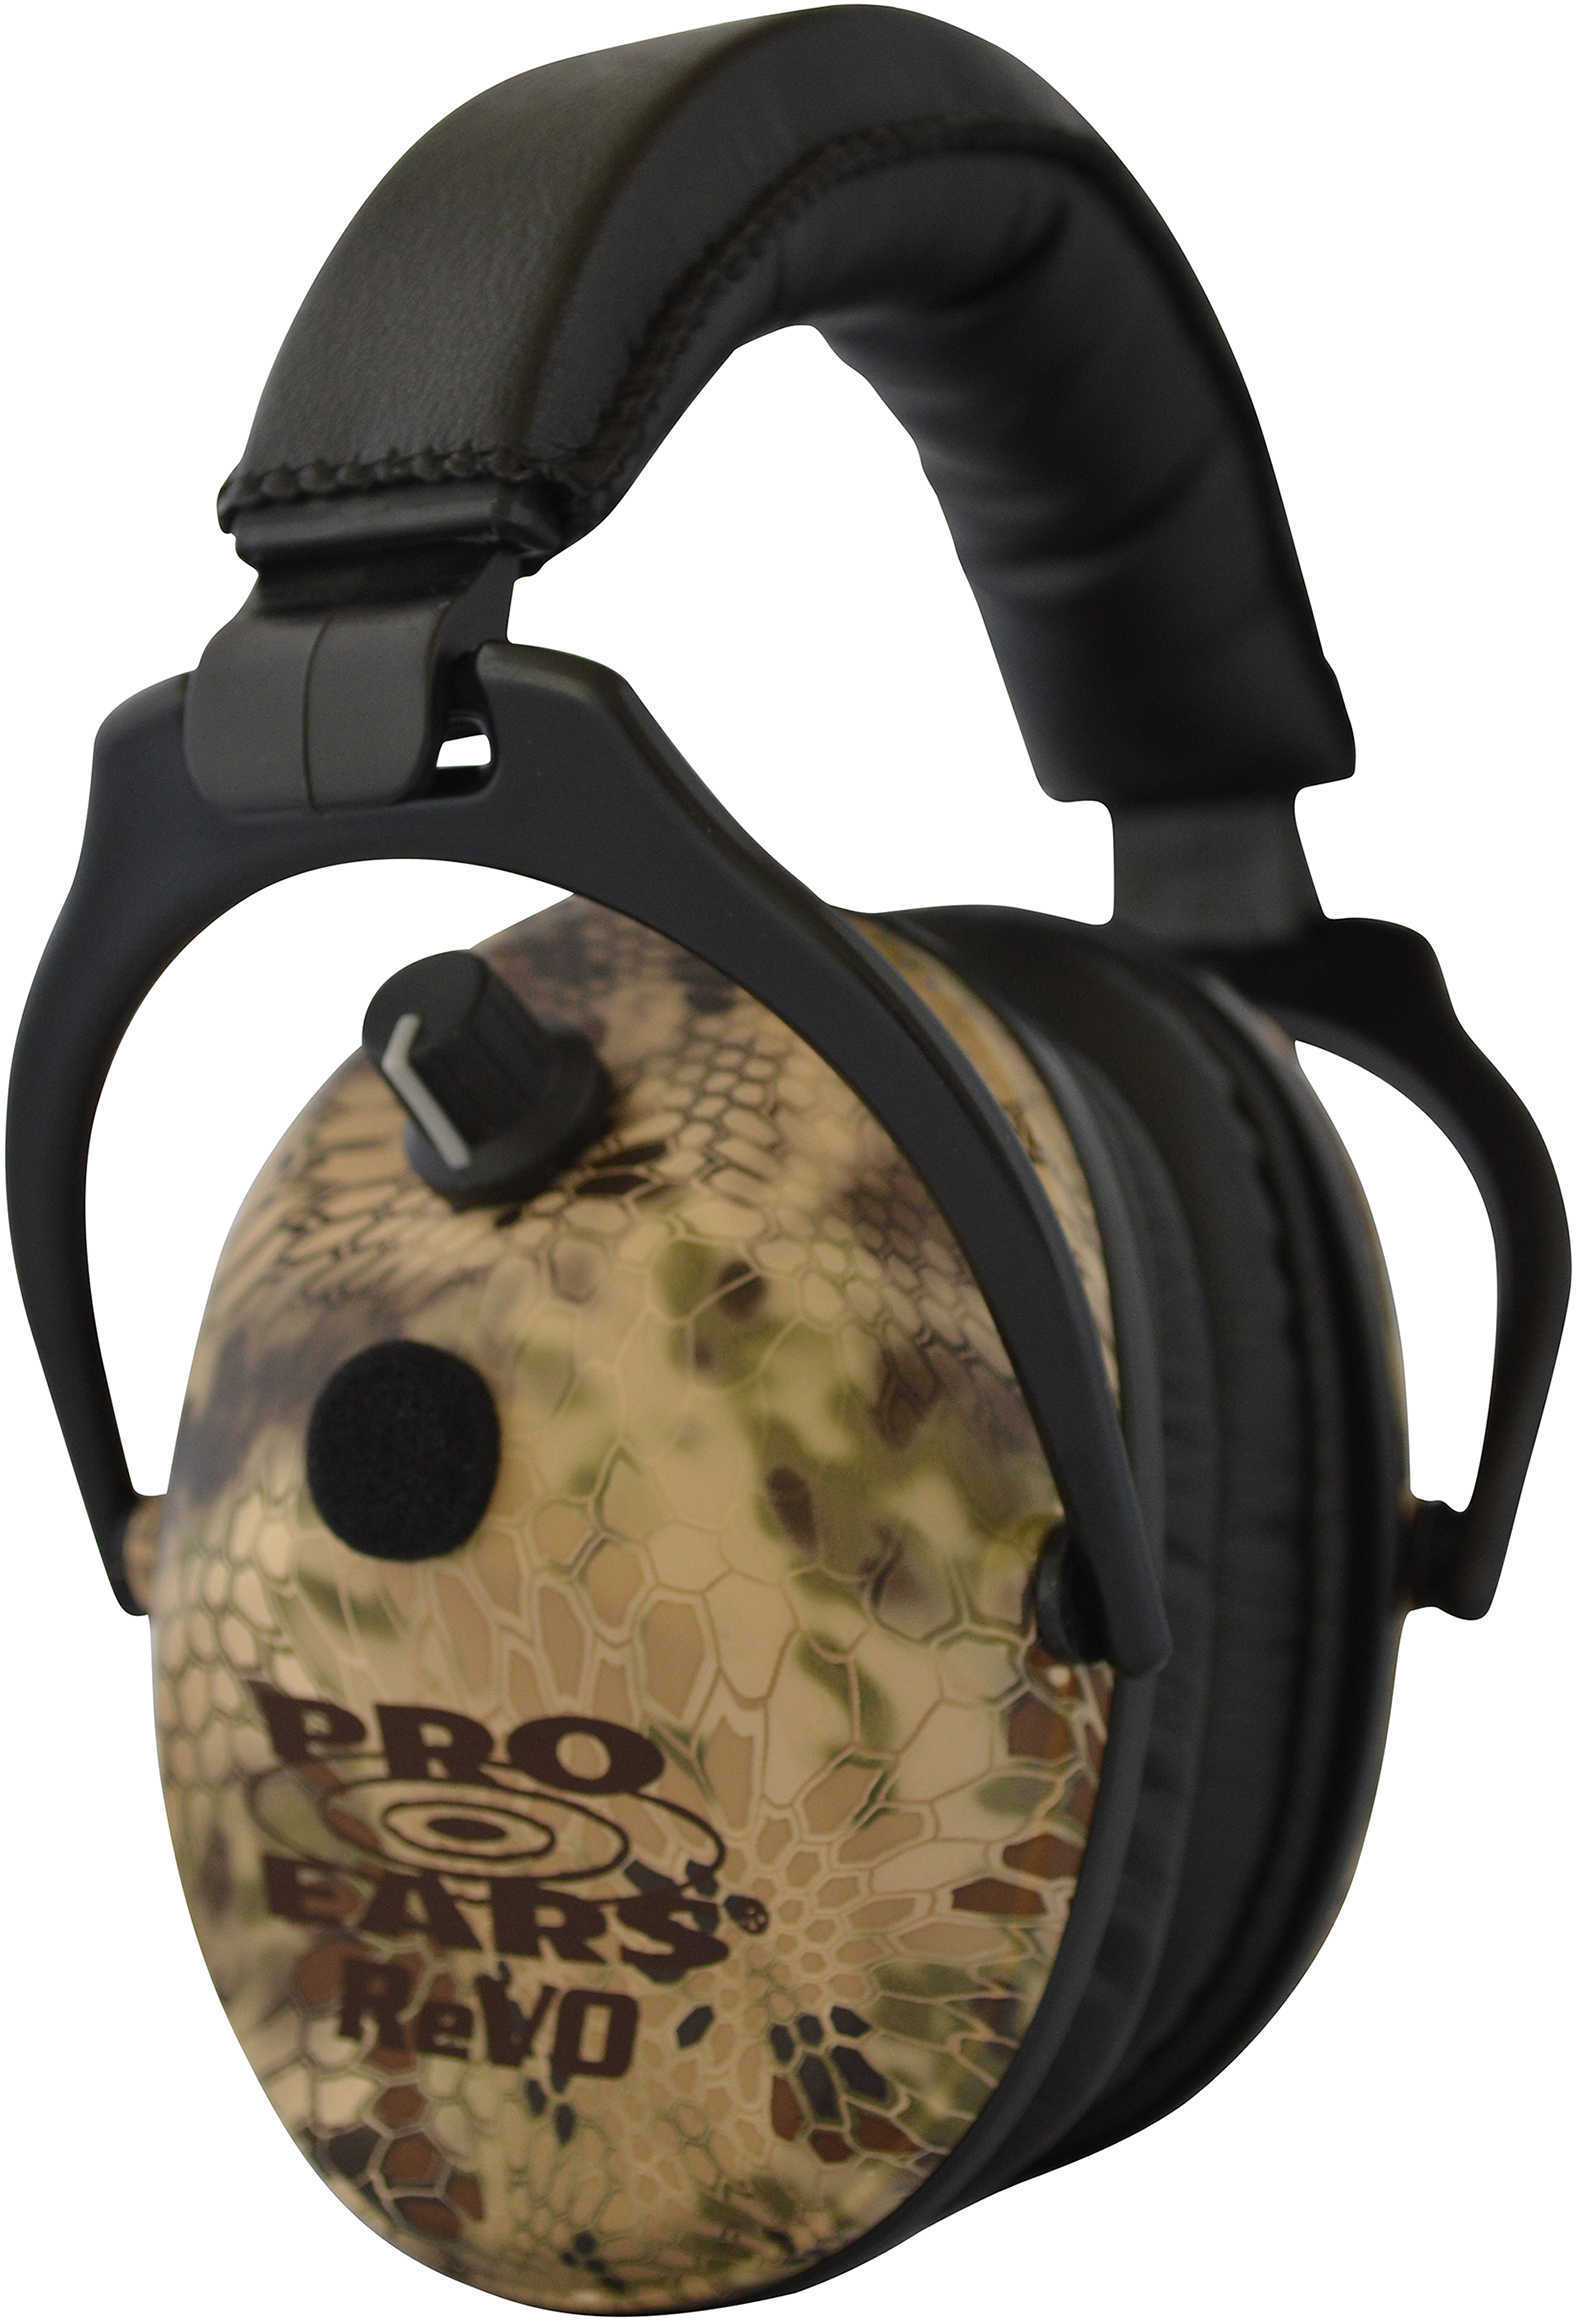 Pro Ears ReVO Electronic Noise Reduction Rating 25dB, Highlander Md: ER300HI